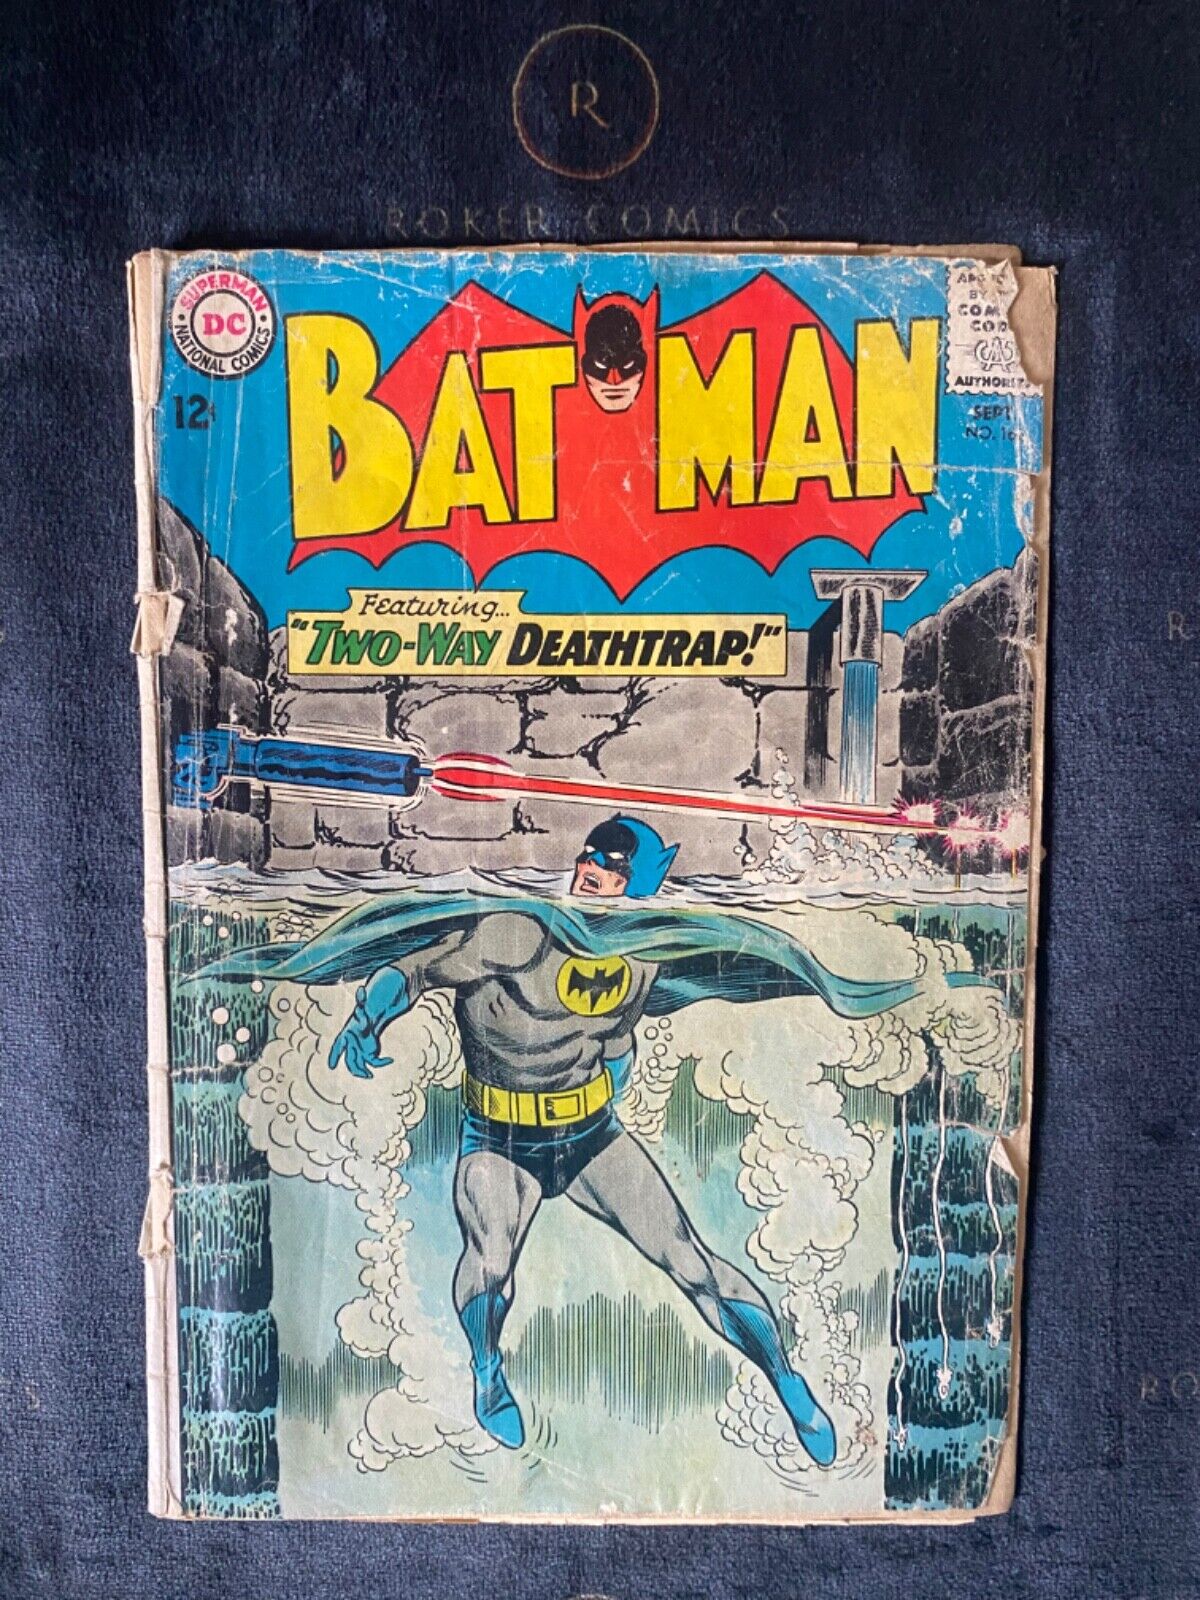 RARE Low Grade 1964 Batman #166